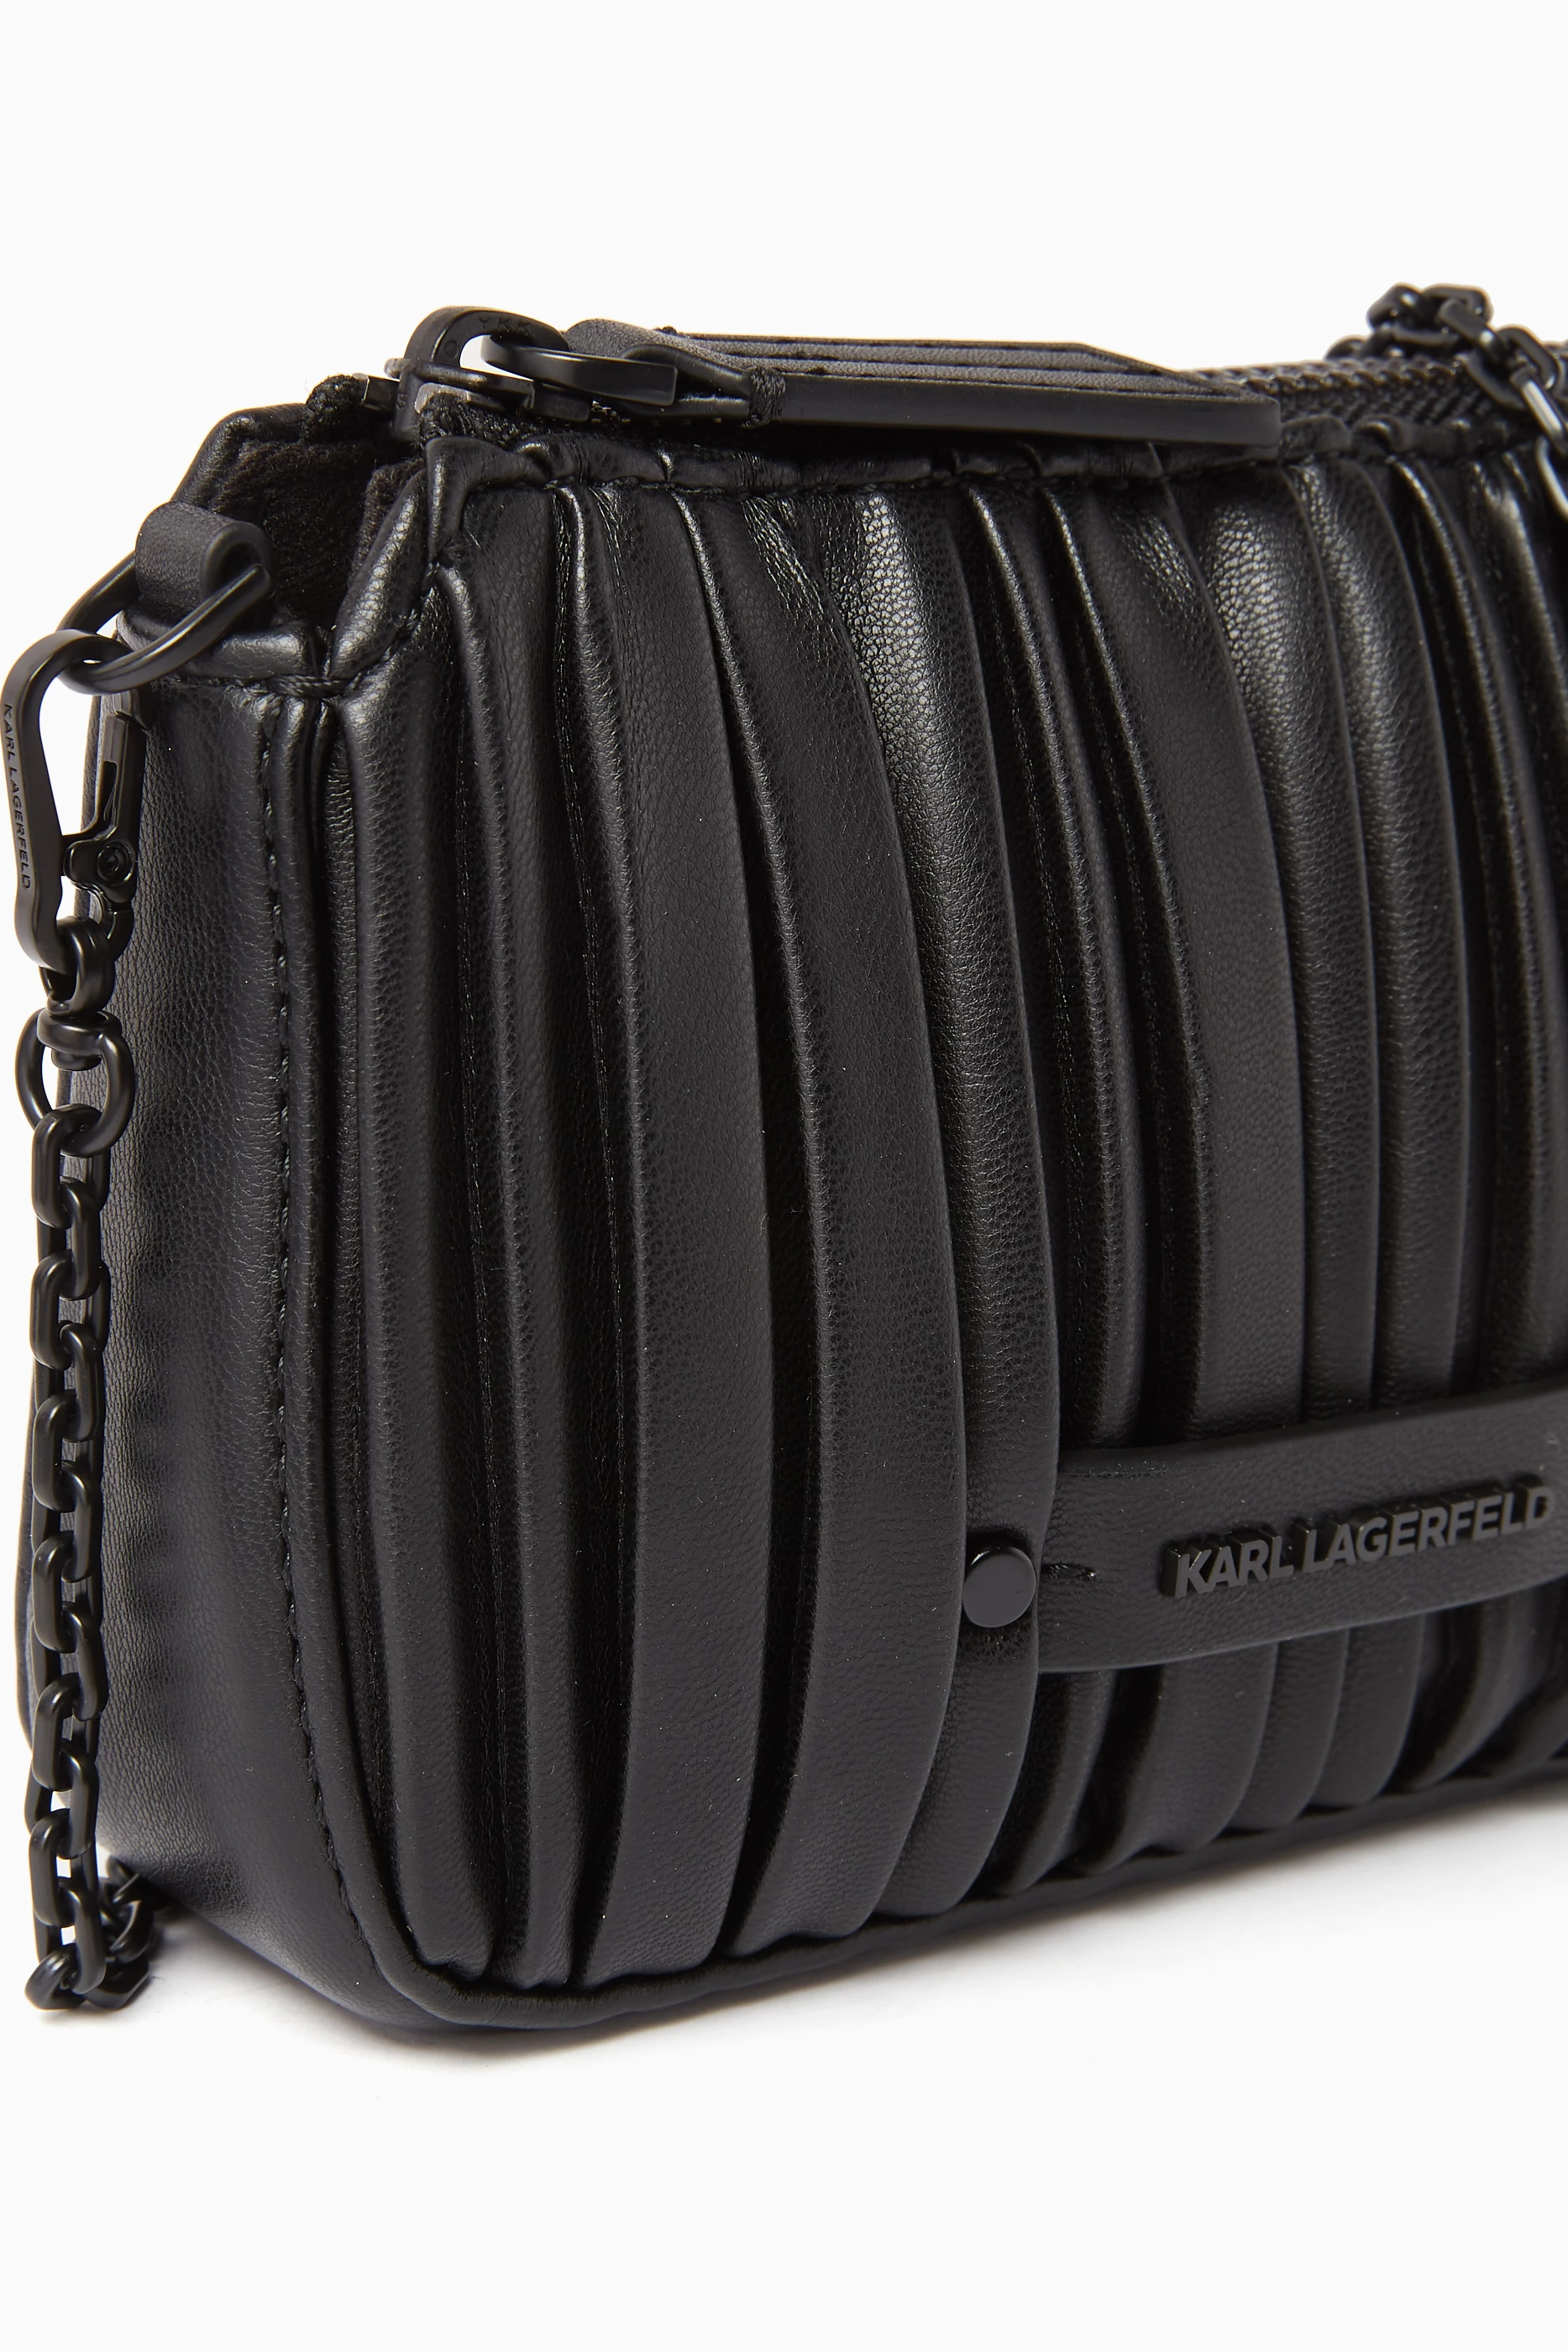 Karl Lagerfeld Woman's K/Kushion Pochette on Chain Shoulder Bag